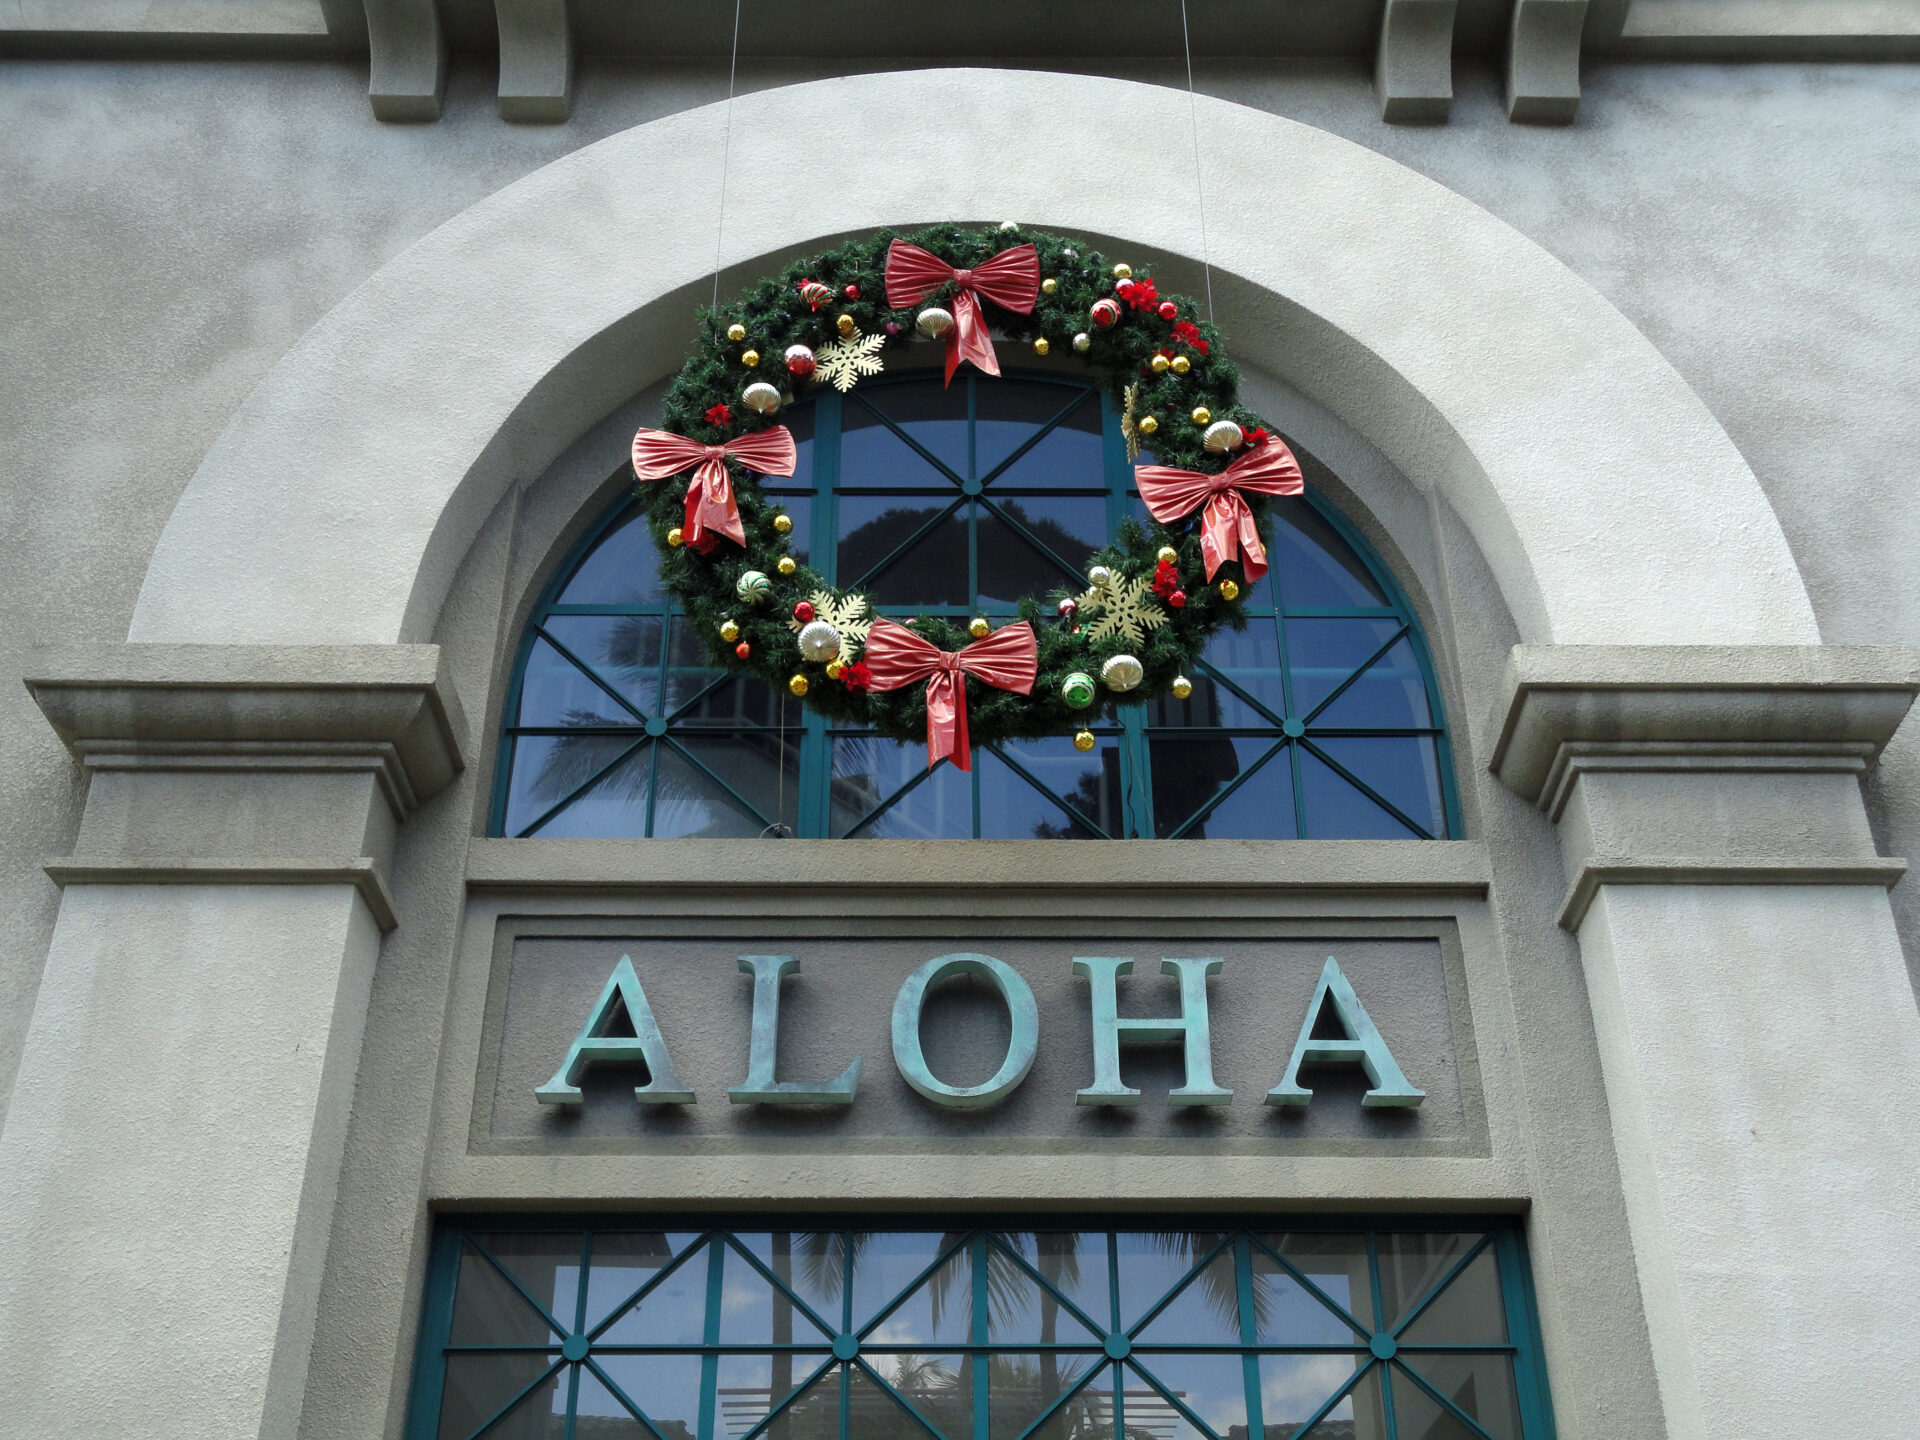 Aloha Tower building with a Christmas Wreath